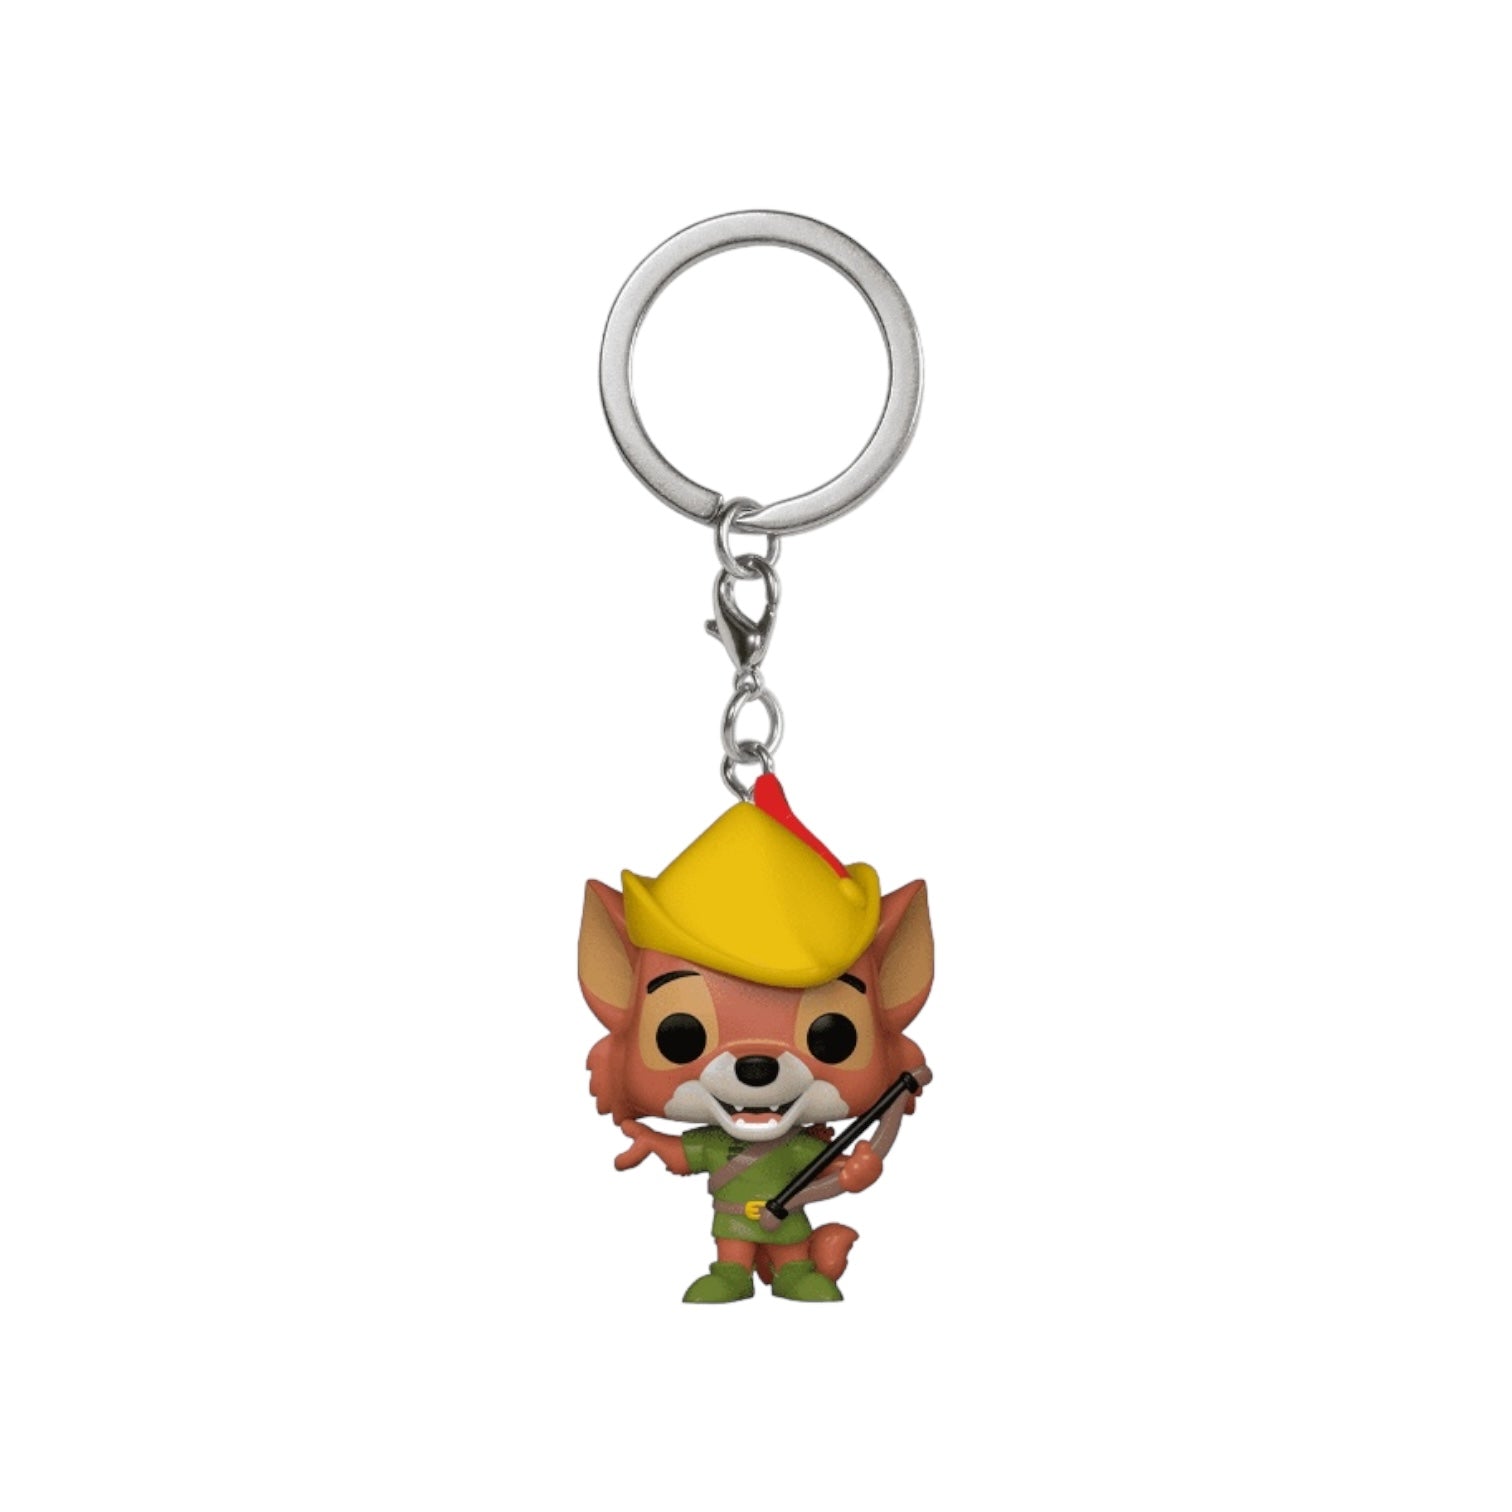 Robin Hood Funko Pocket Pop Keychain - Disney